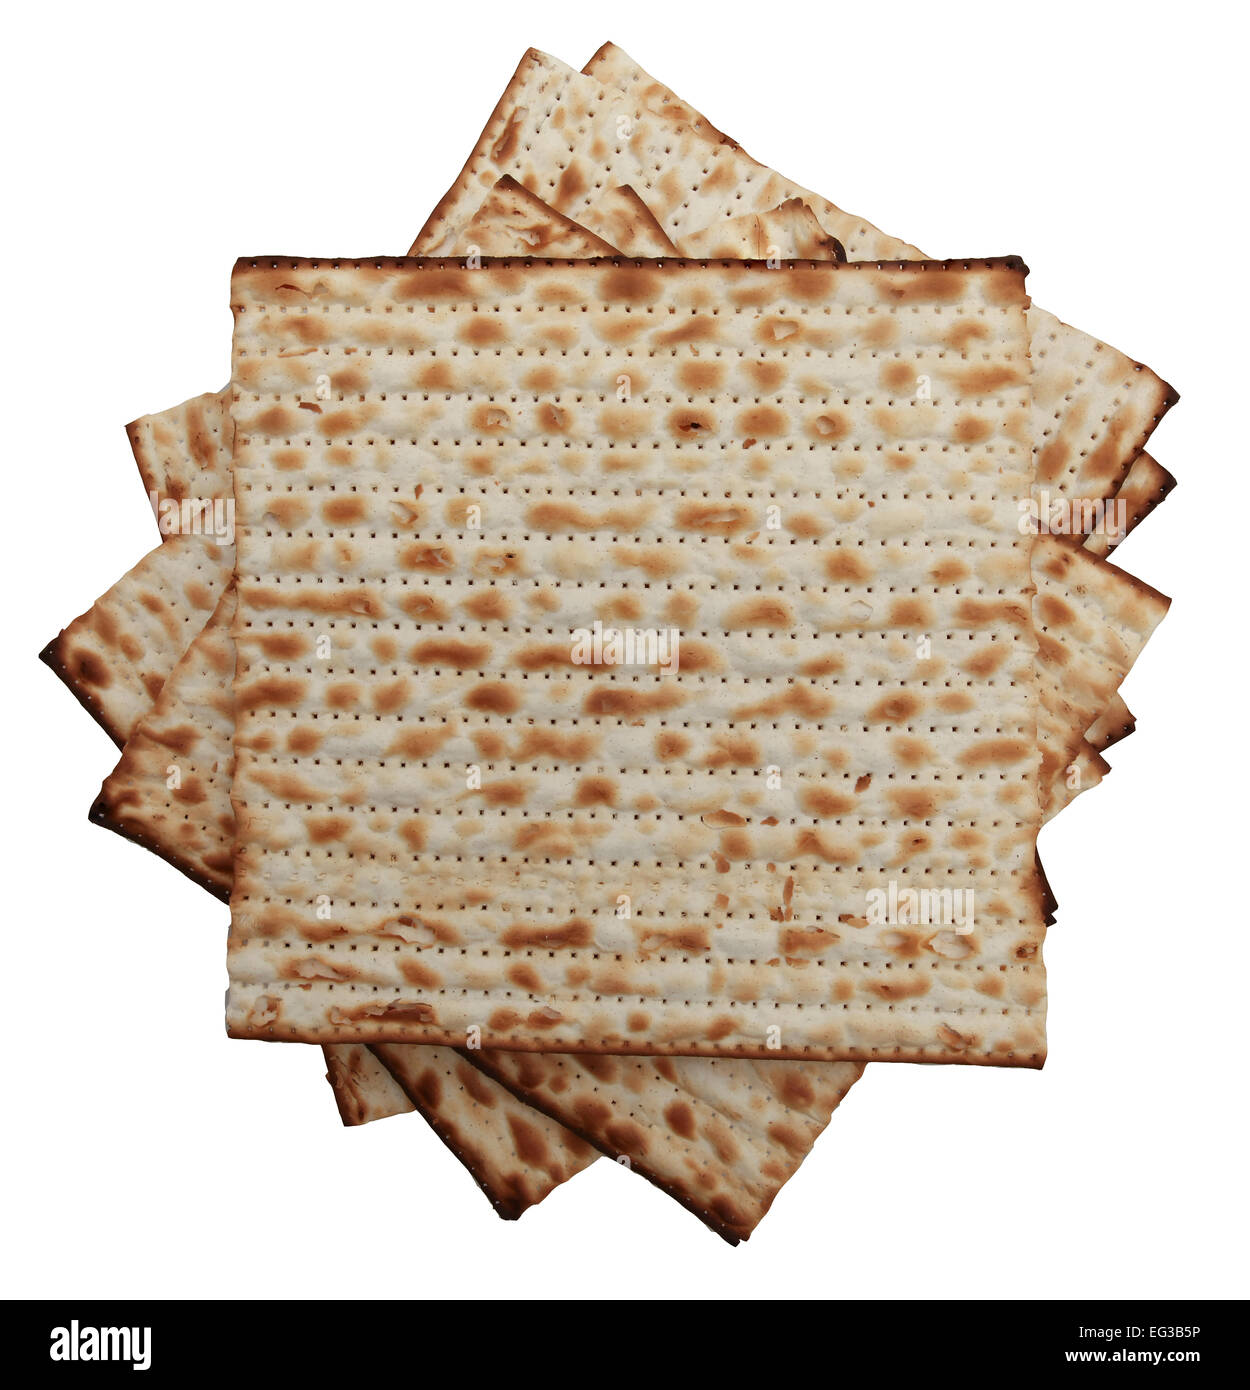 Traditional Jewish holiday food - Passover matzo background Stock Photo